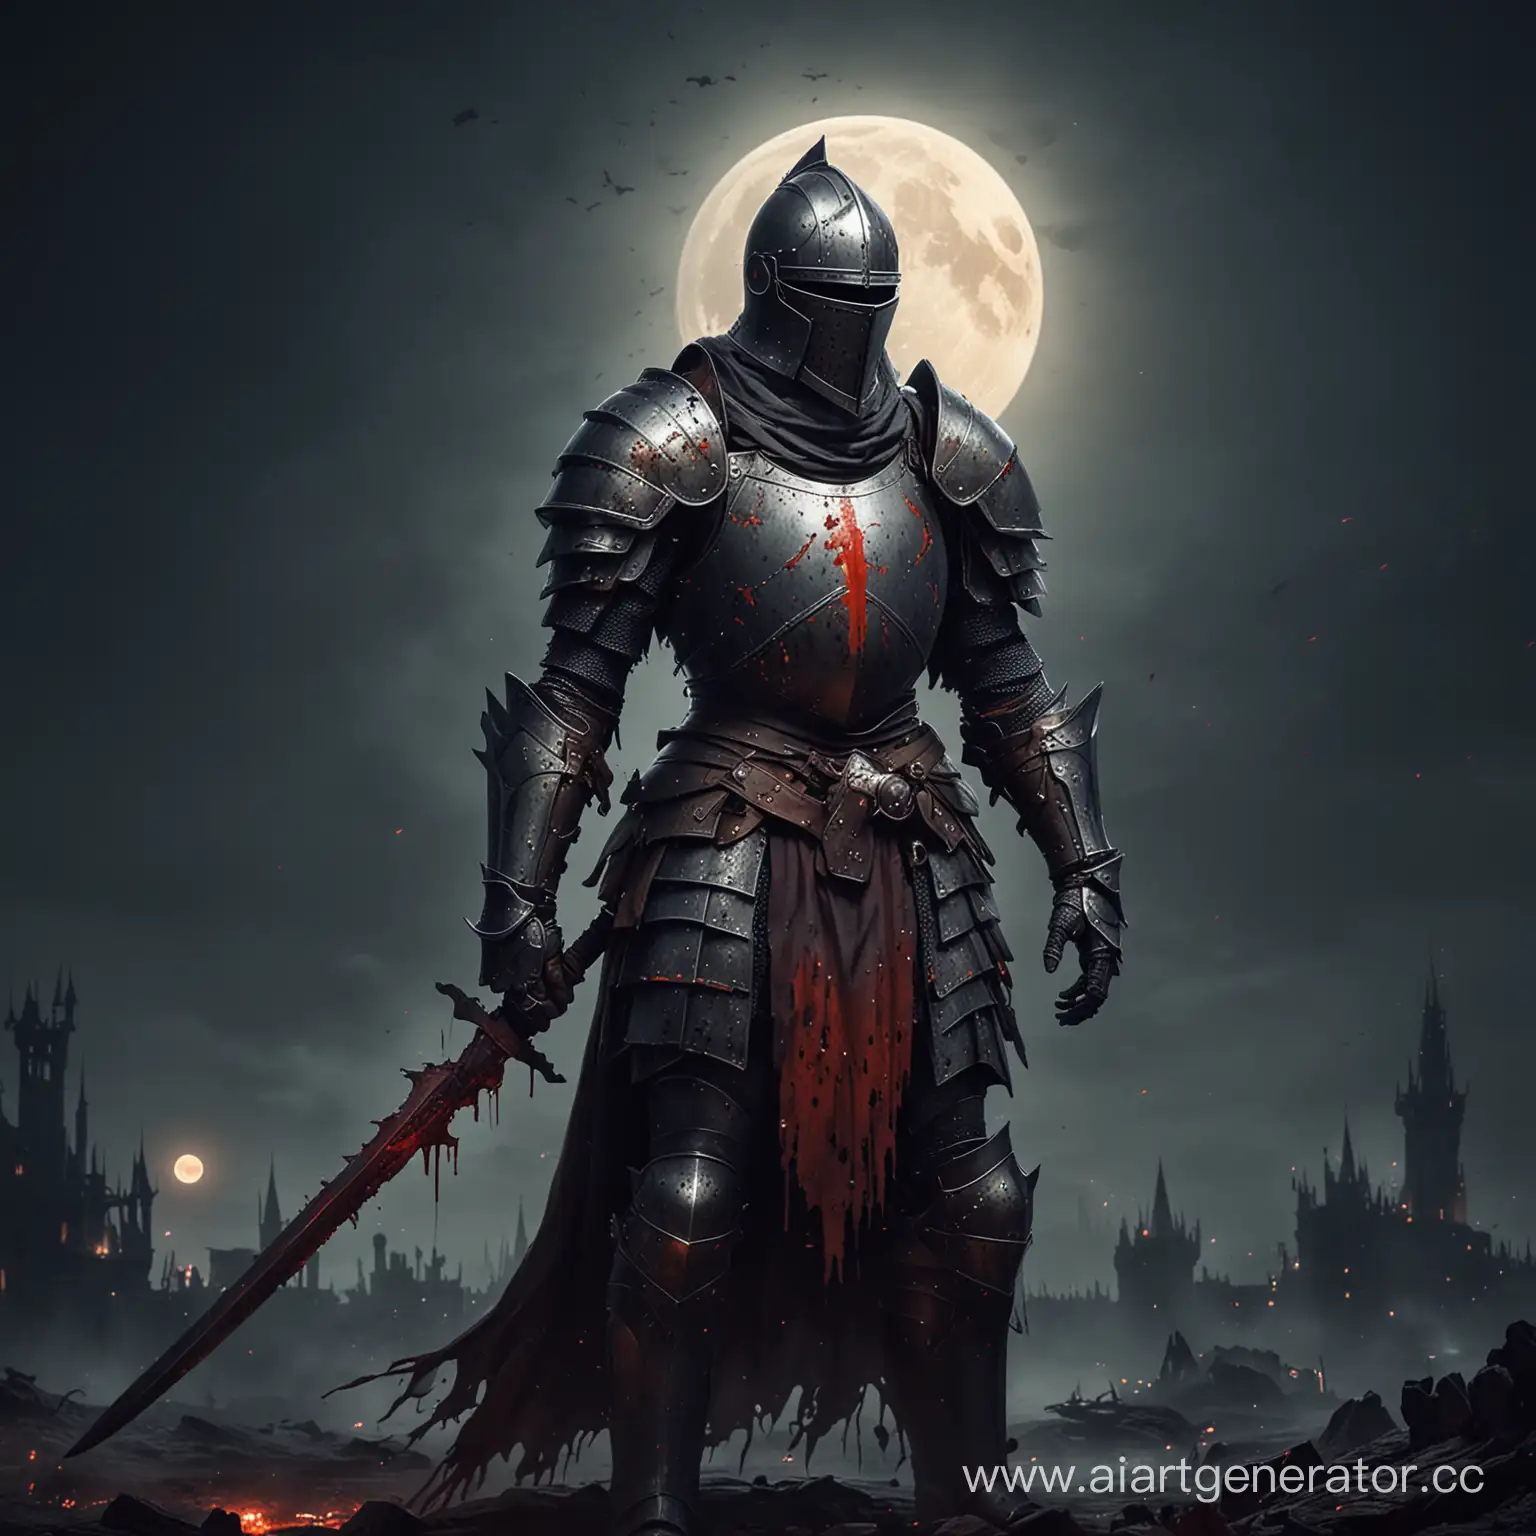 Knight-in-Armor-Under-Bloody-Moonlit-Night